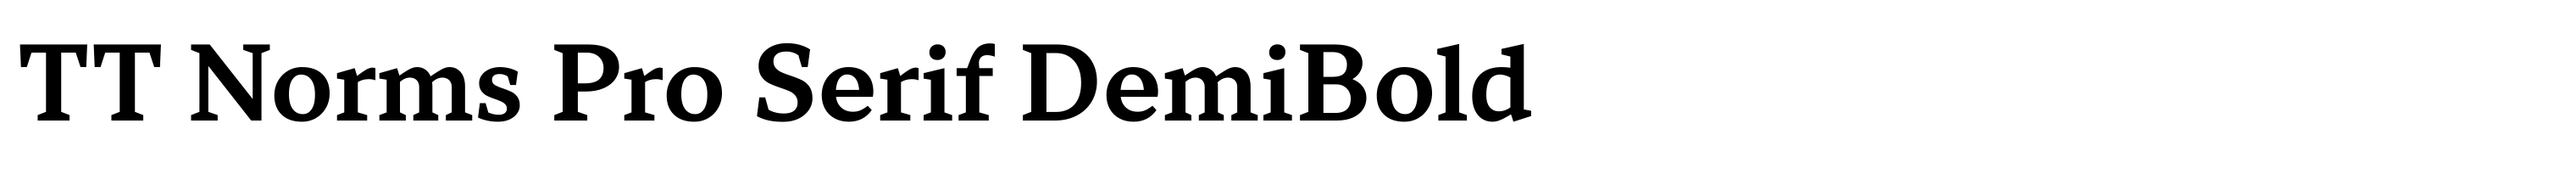 TT Norms Pro Serif DemiBold